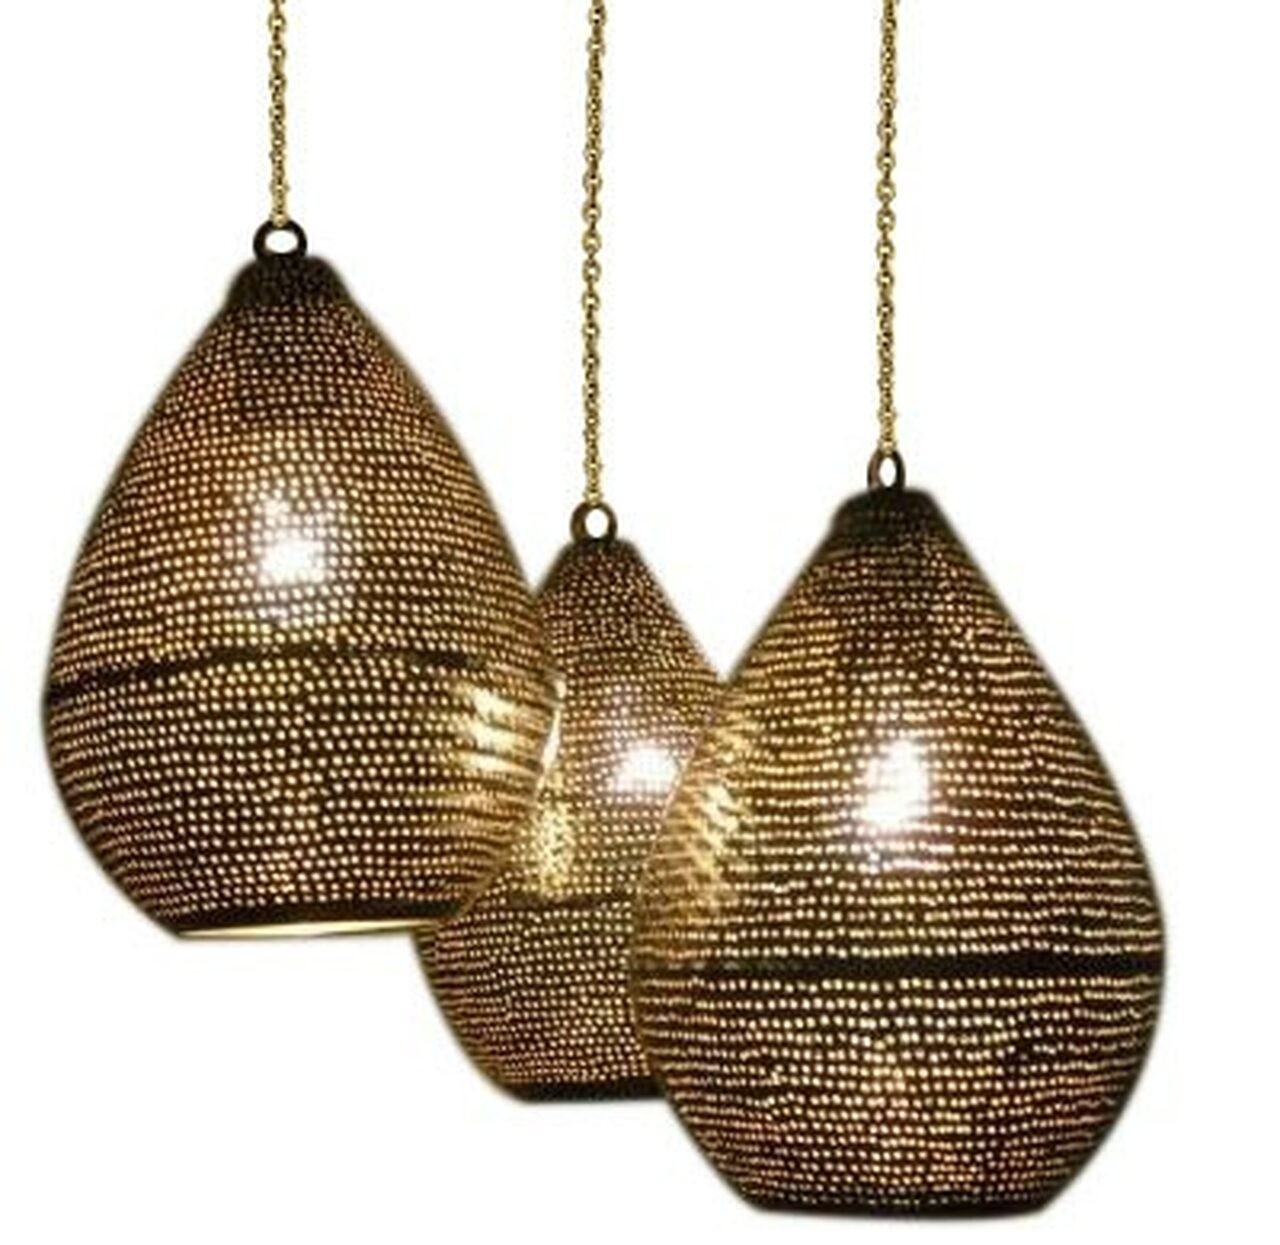 Moroccan pendant lights hanging ceiling lights